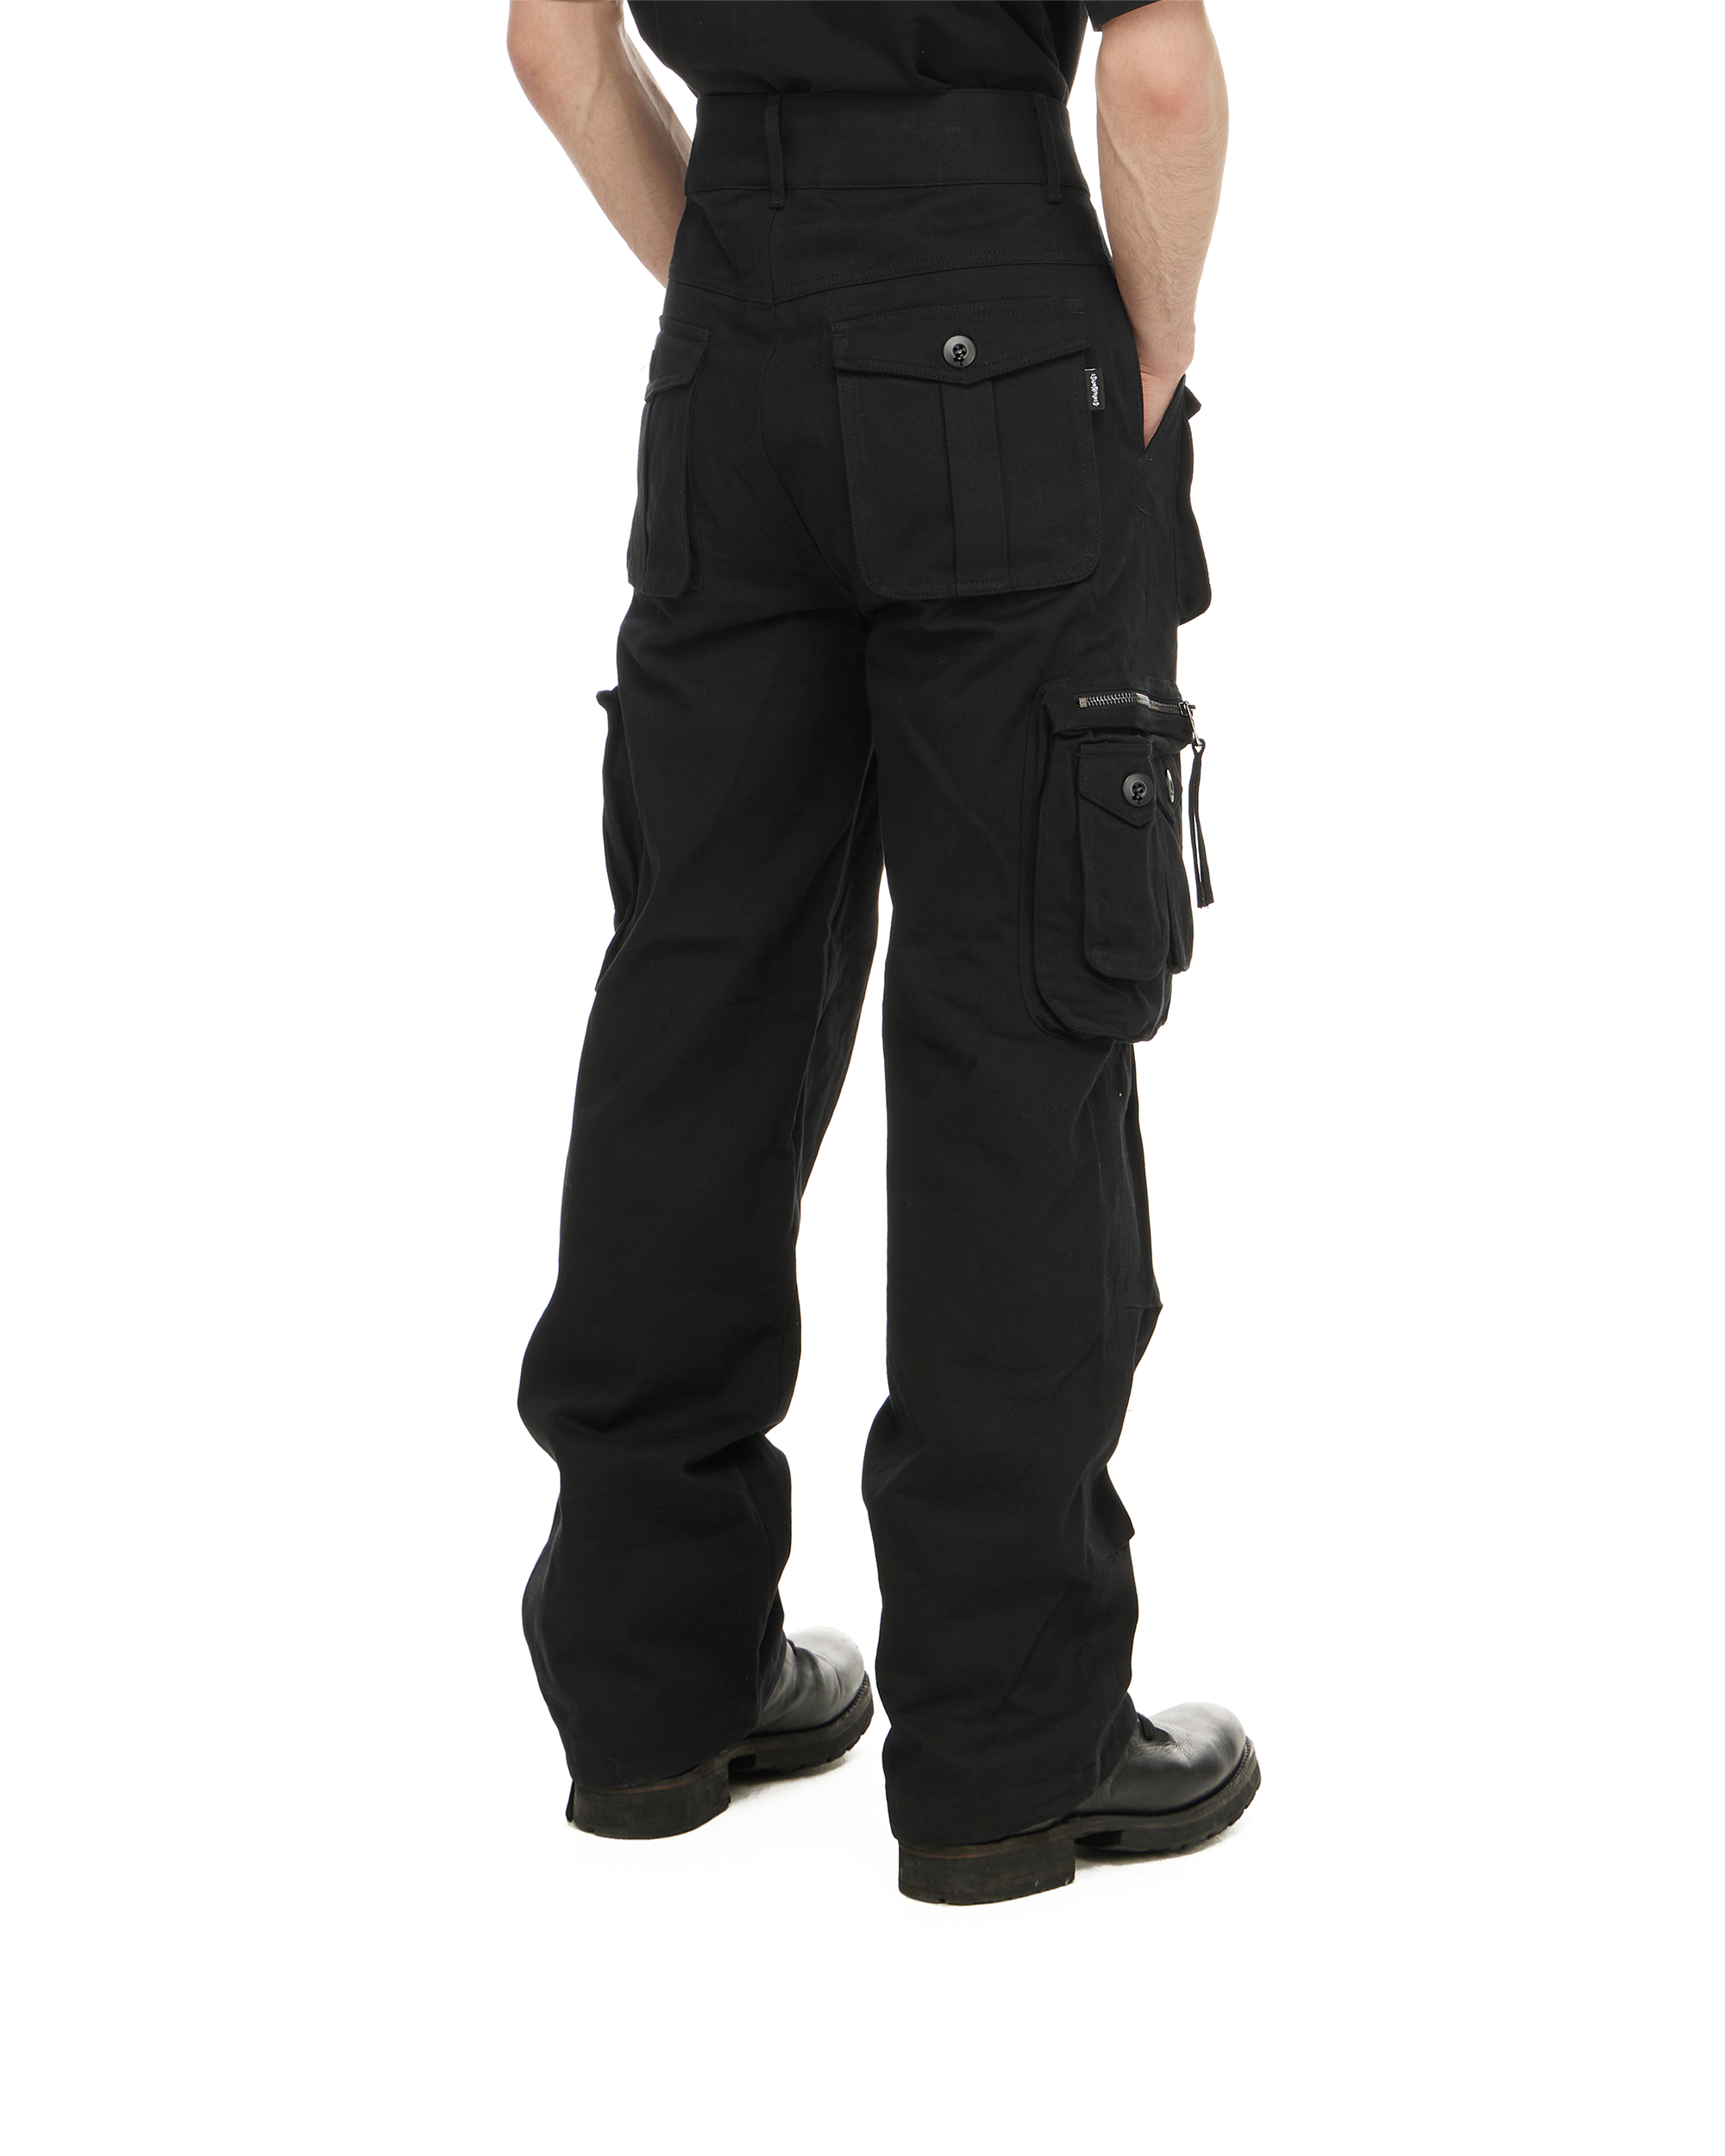 'I'm at work' cargo pant, black